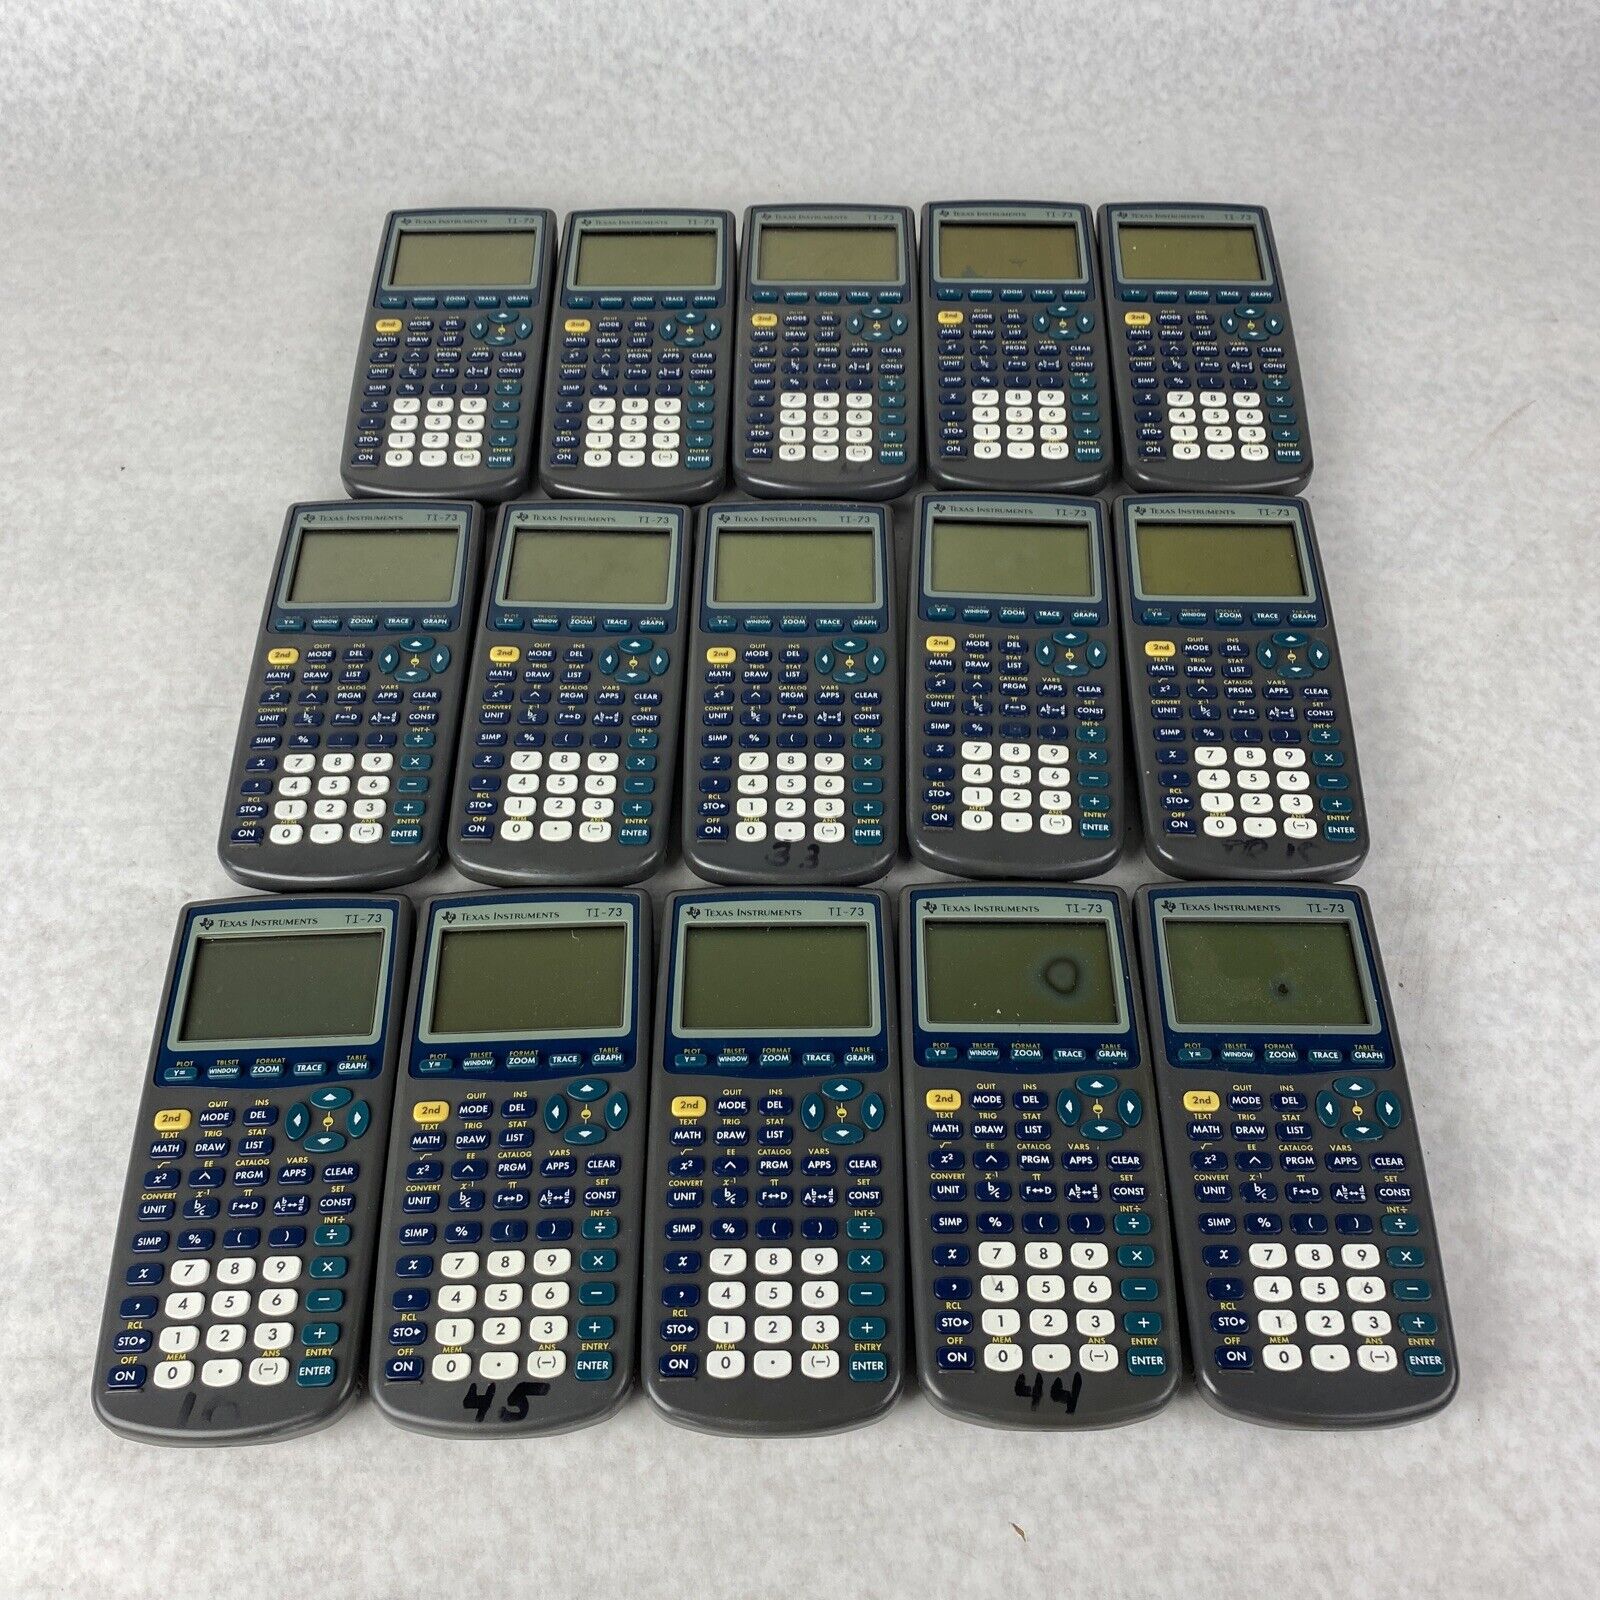 Lot of 15 Texas instrument Ti-73 Calculator -Parts or Repair